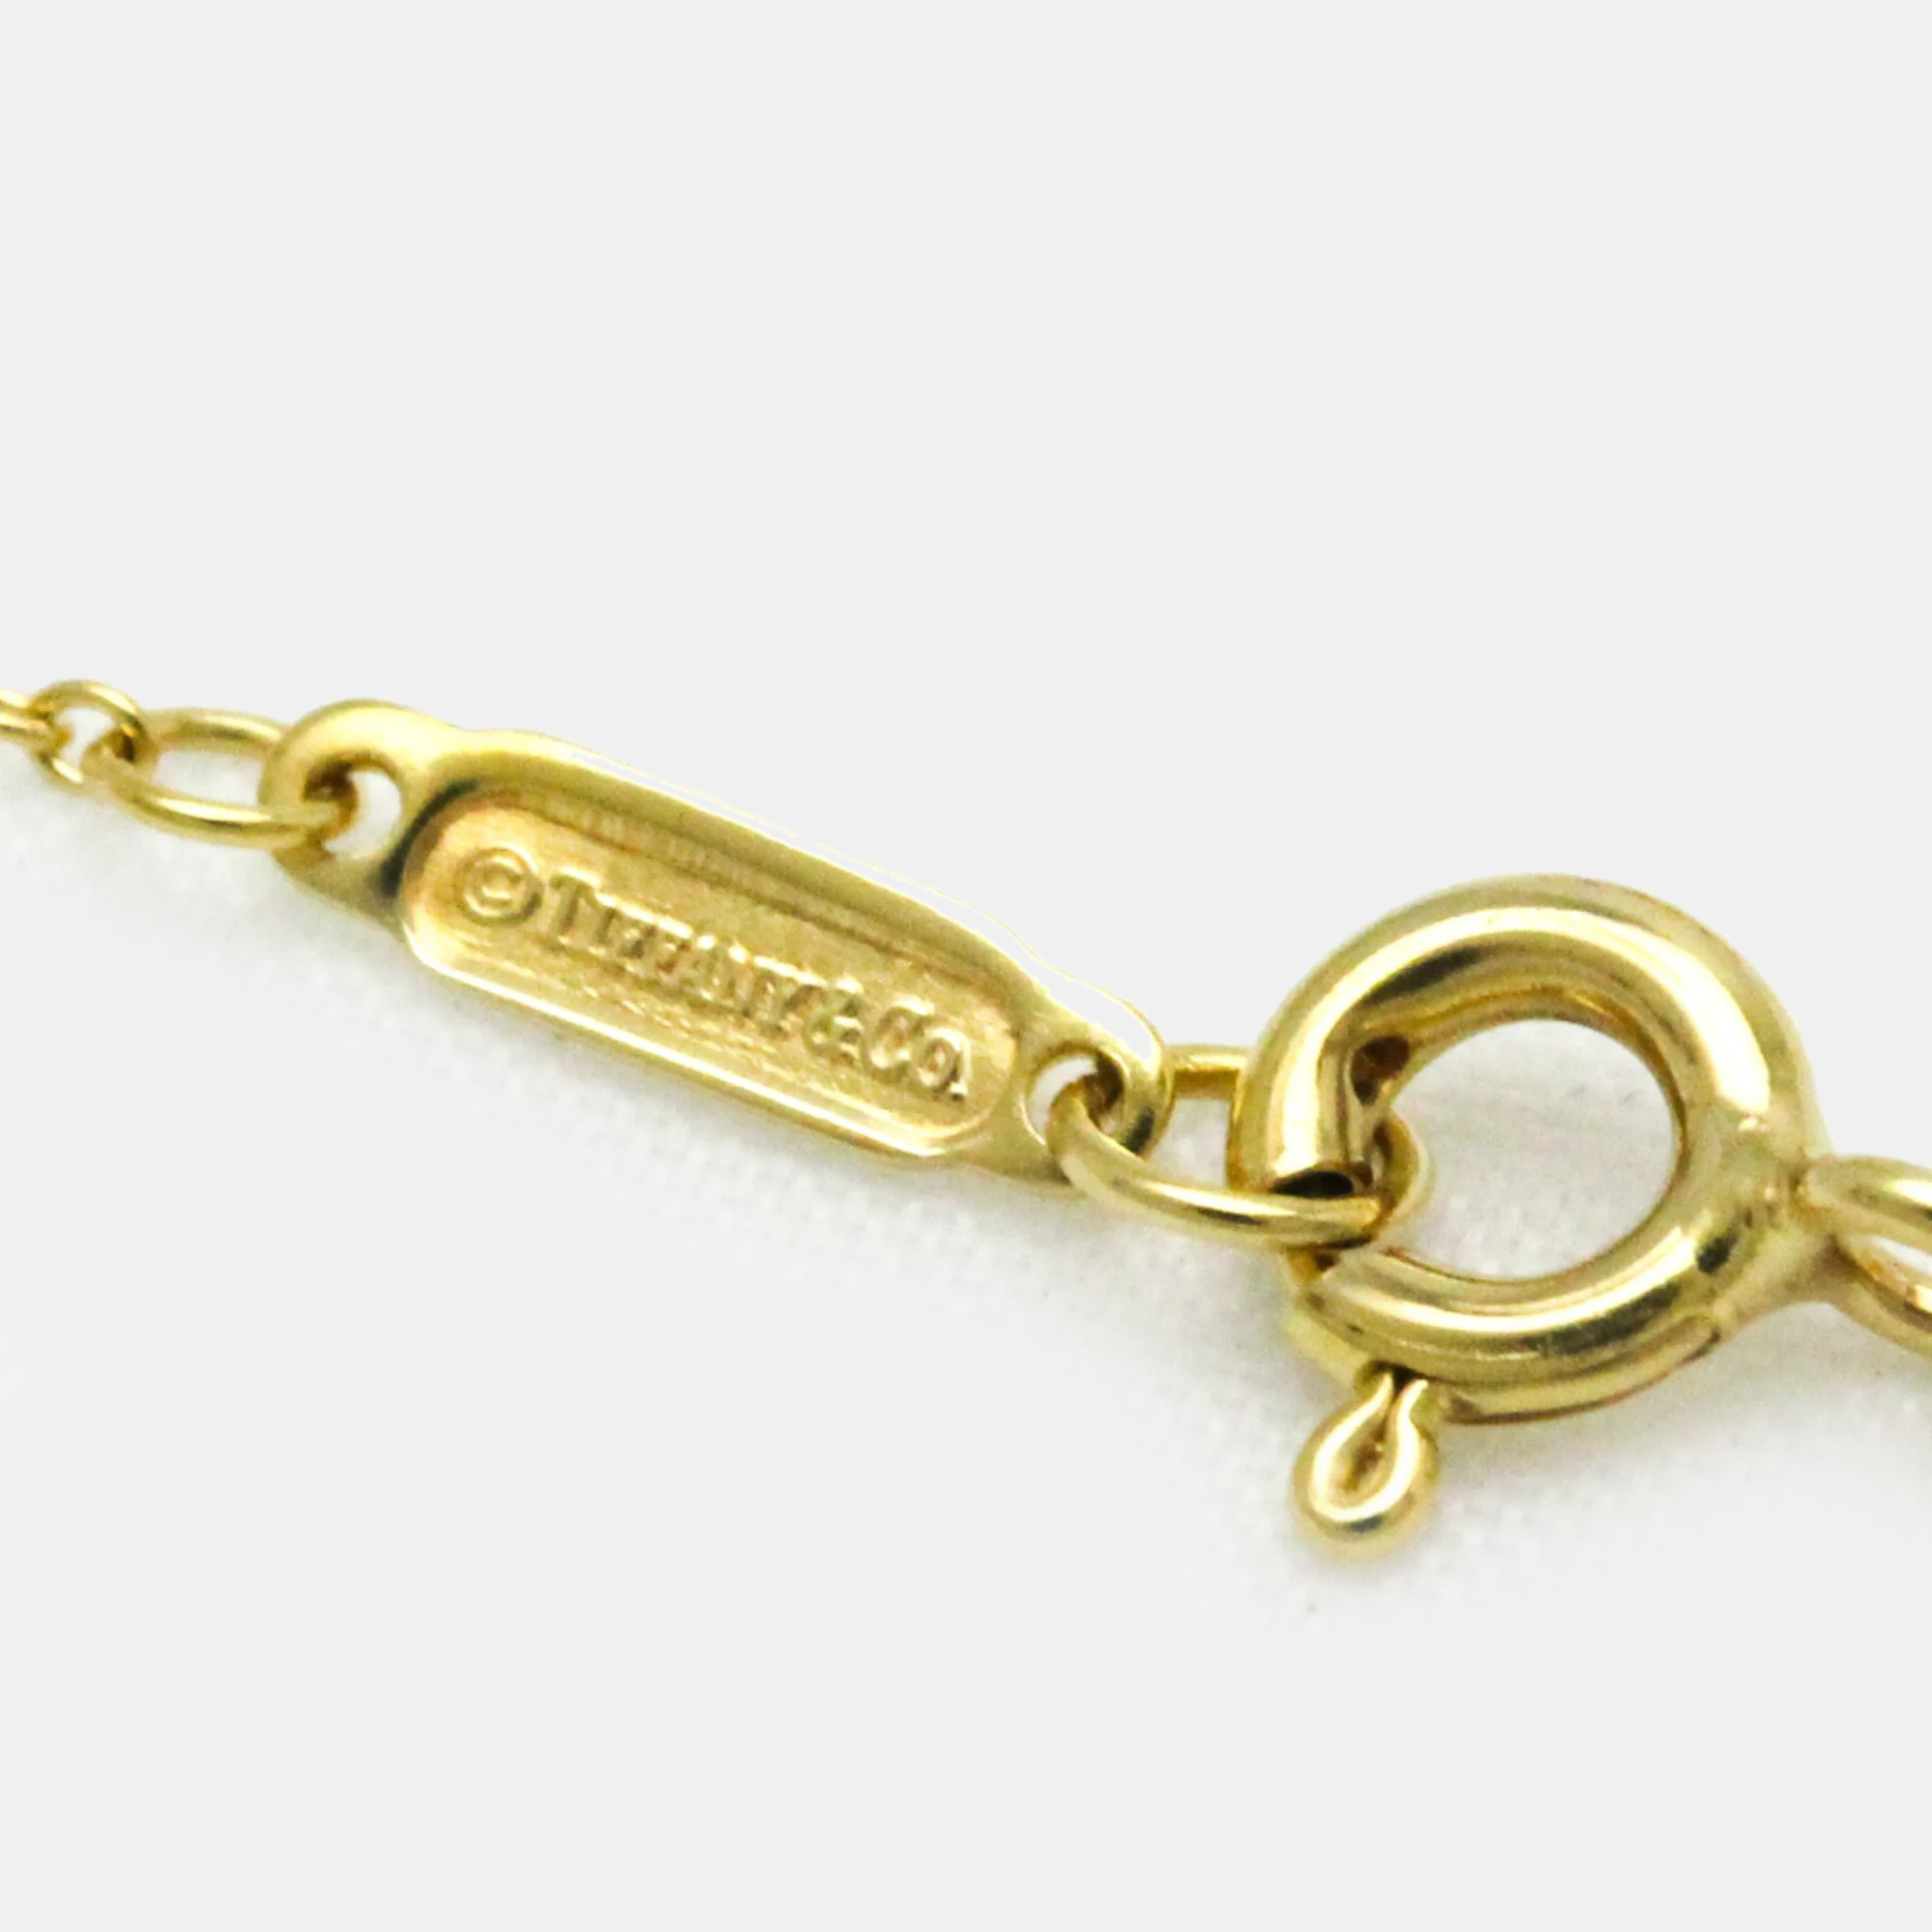 Tiffany & Co. Cross 18K Yellow Gold Diamond Necklace